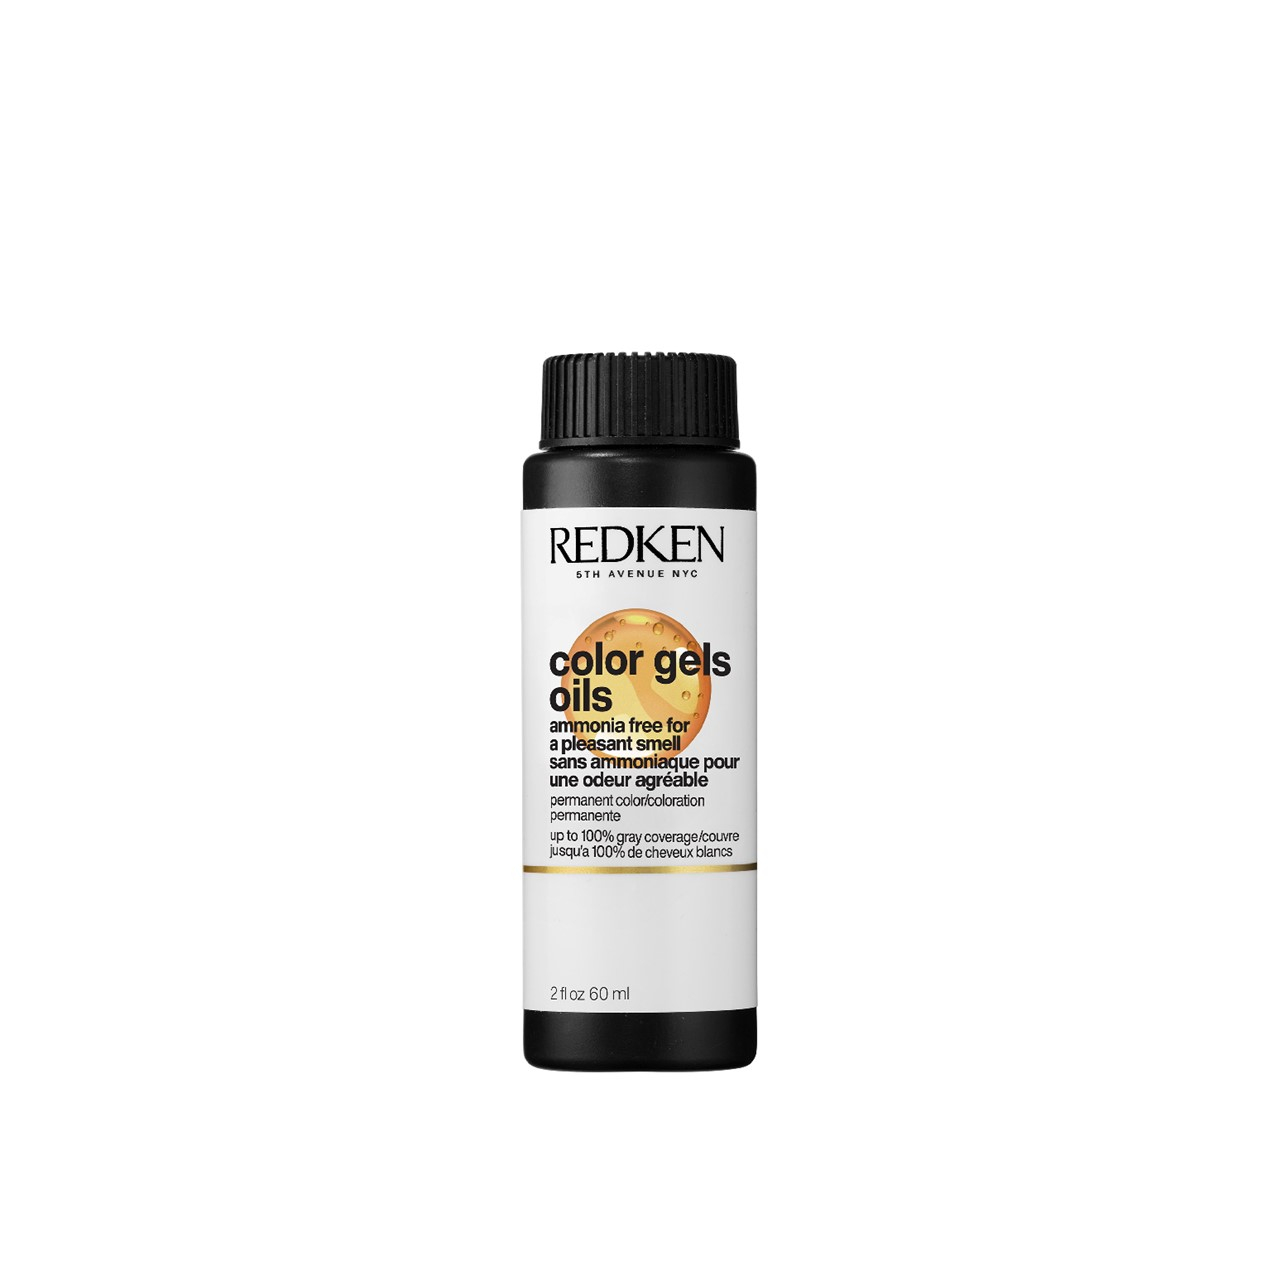 Redken Color Gels Oils 5BR Brownstone Permanent Hair Dye 60ml (2.03 fl oz)